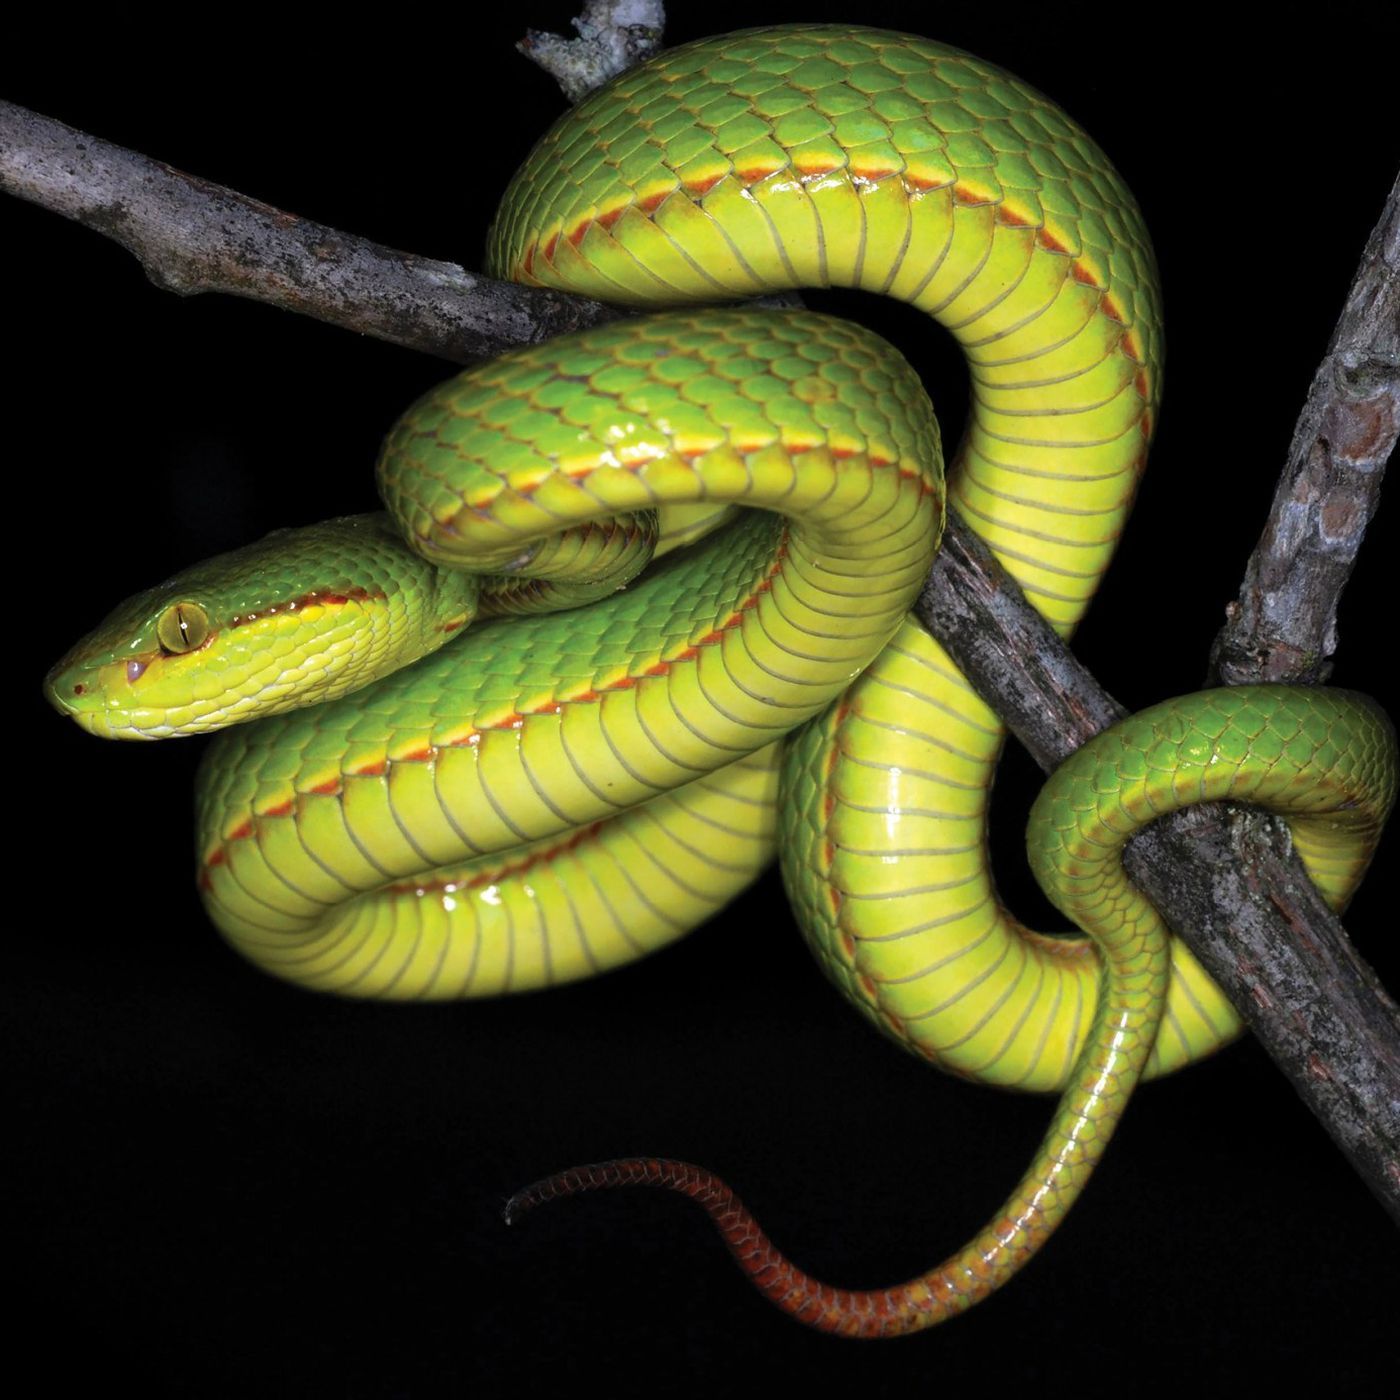 Harry Potter' snake: New snake named after Salazar Slytherin